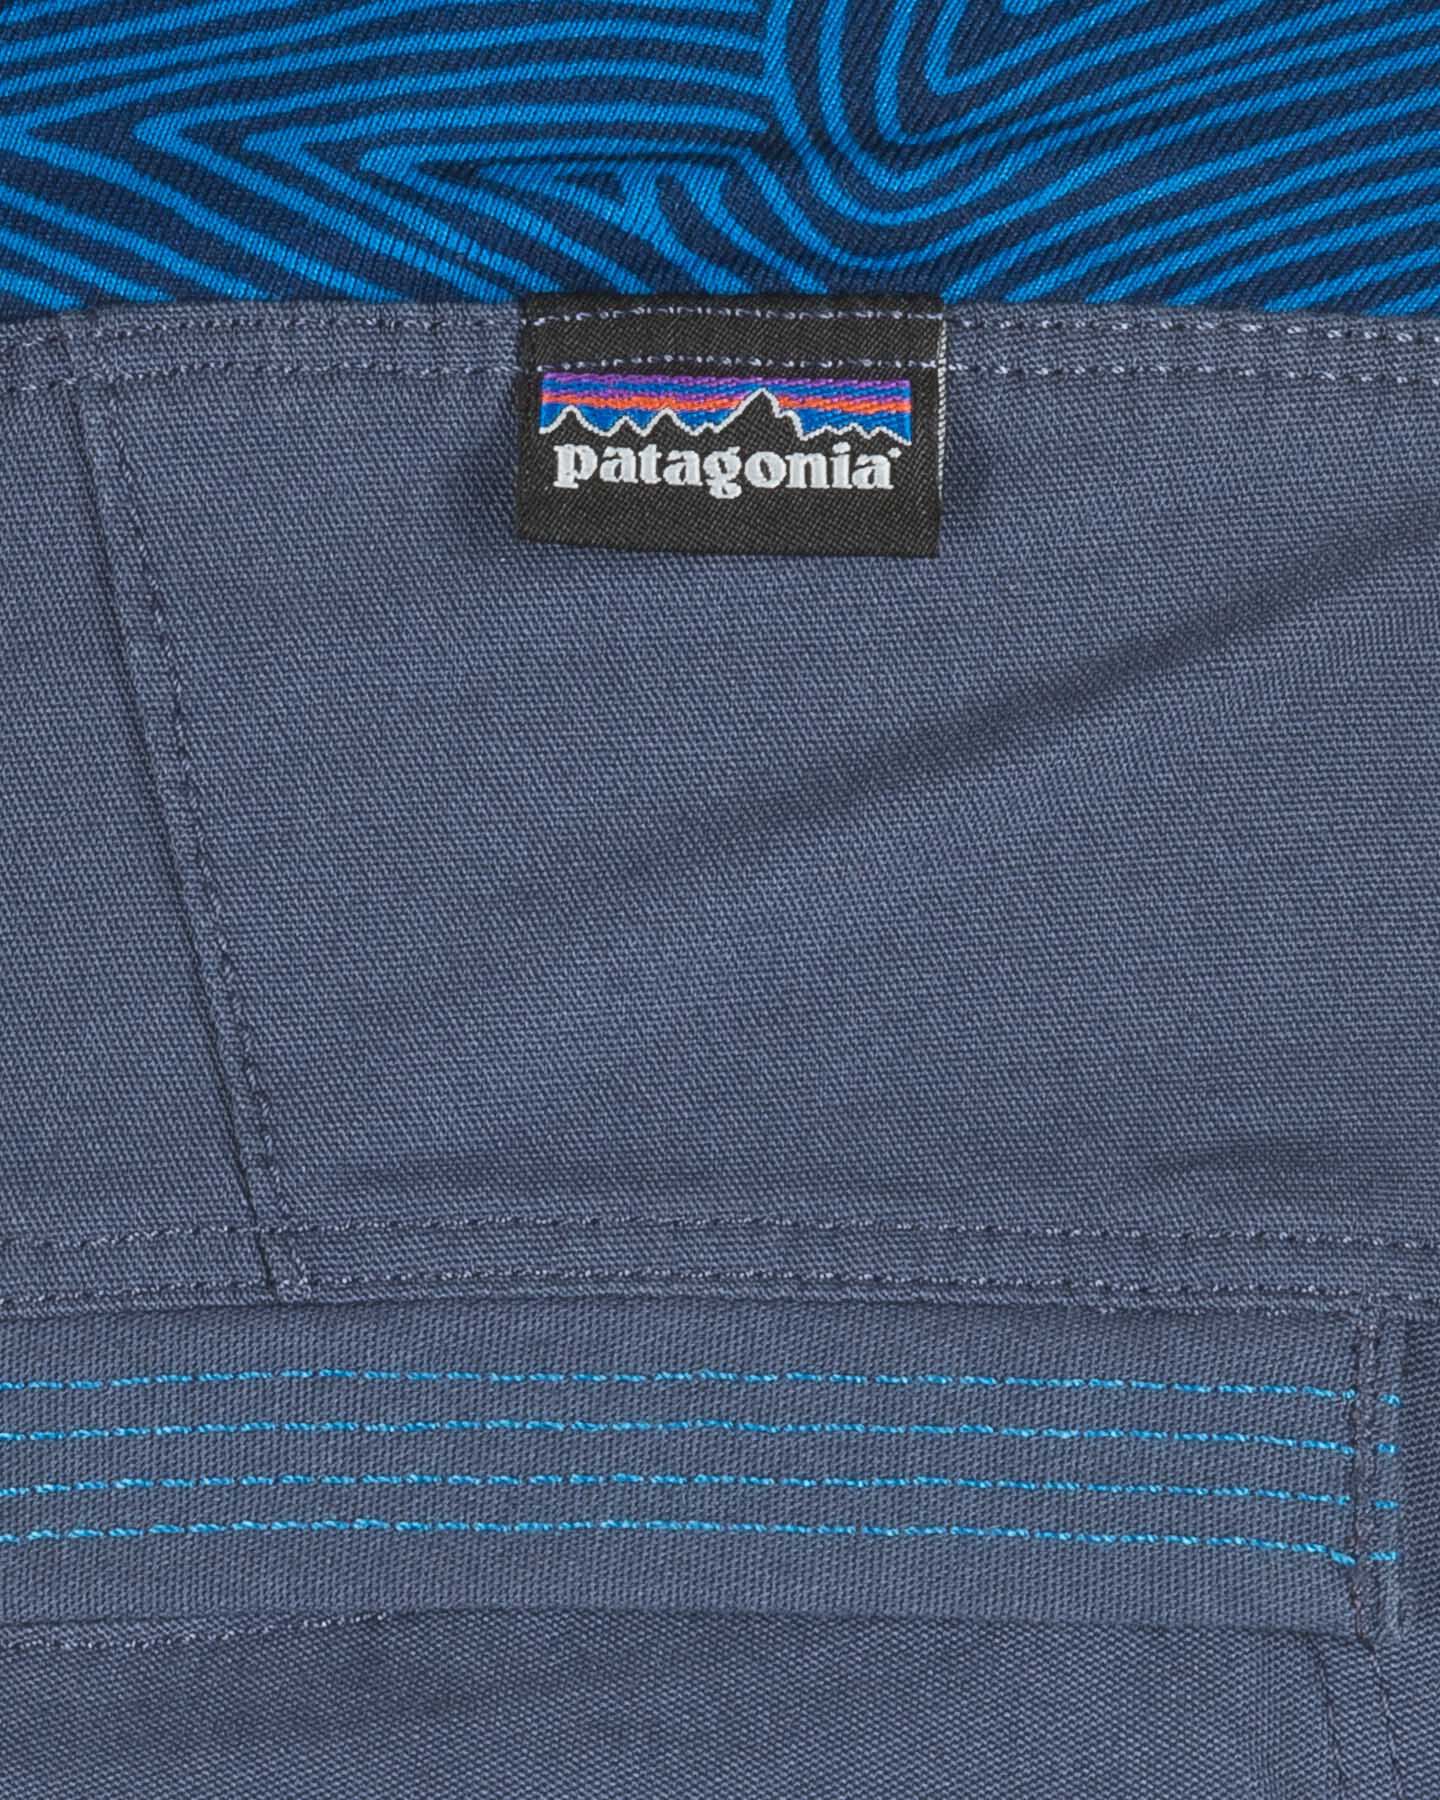  Pantalone outdoor PATAGONIA CALIZA ROCK W S4077589|1|2 scatto 2